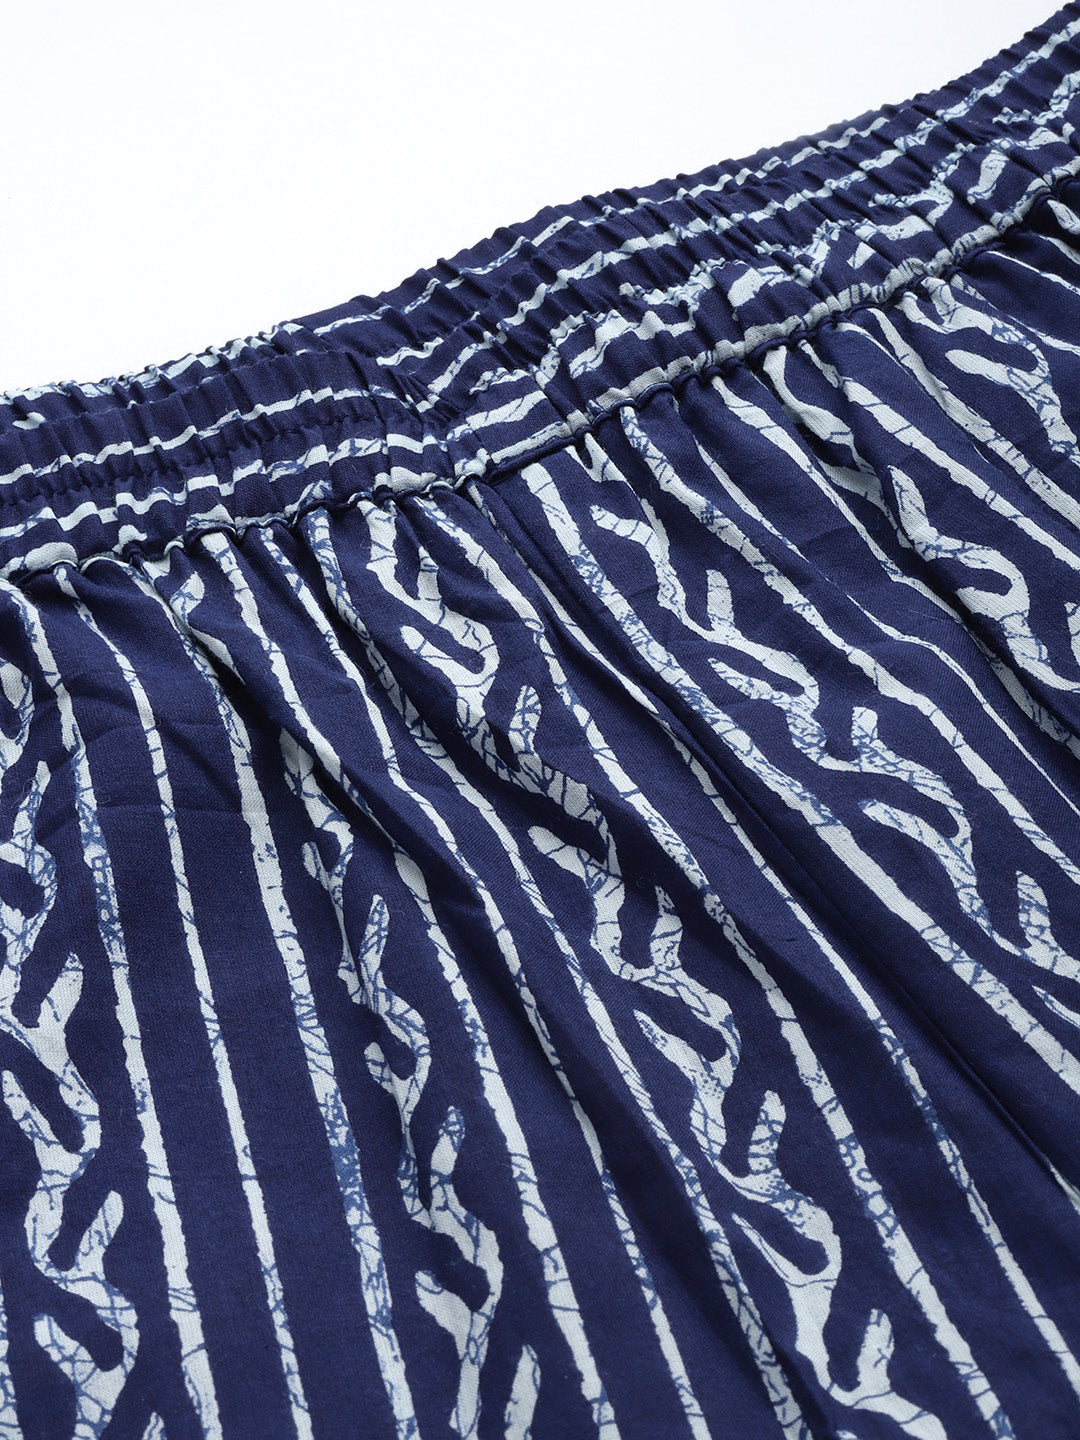 Women's's Indigo Blue Geometric Printed Pure Cotton Night Suit